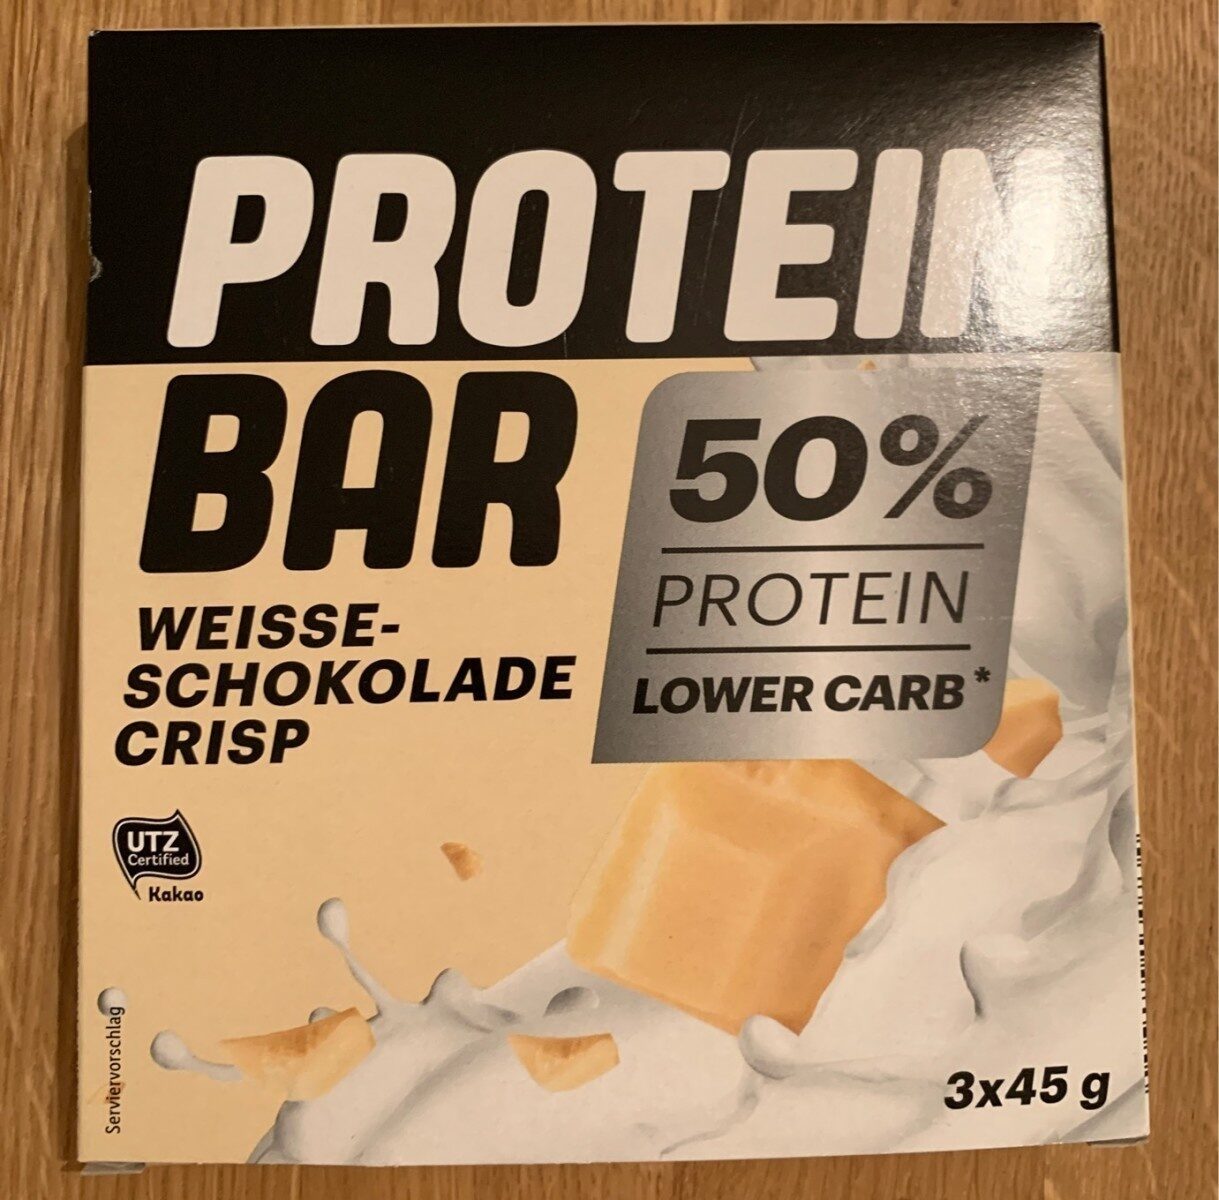 Protein Bar Weiße-Schokolade Crisp - Prodotto - de